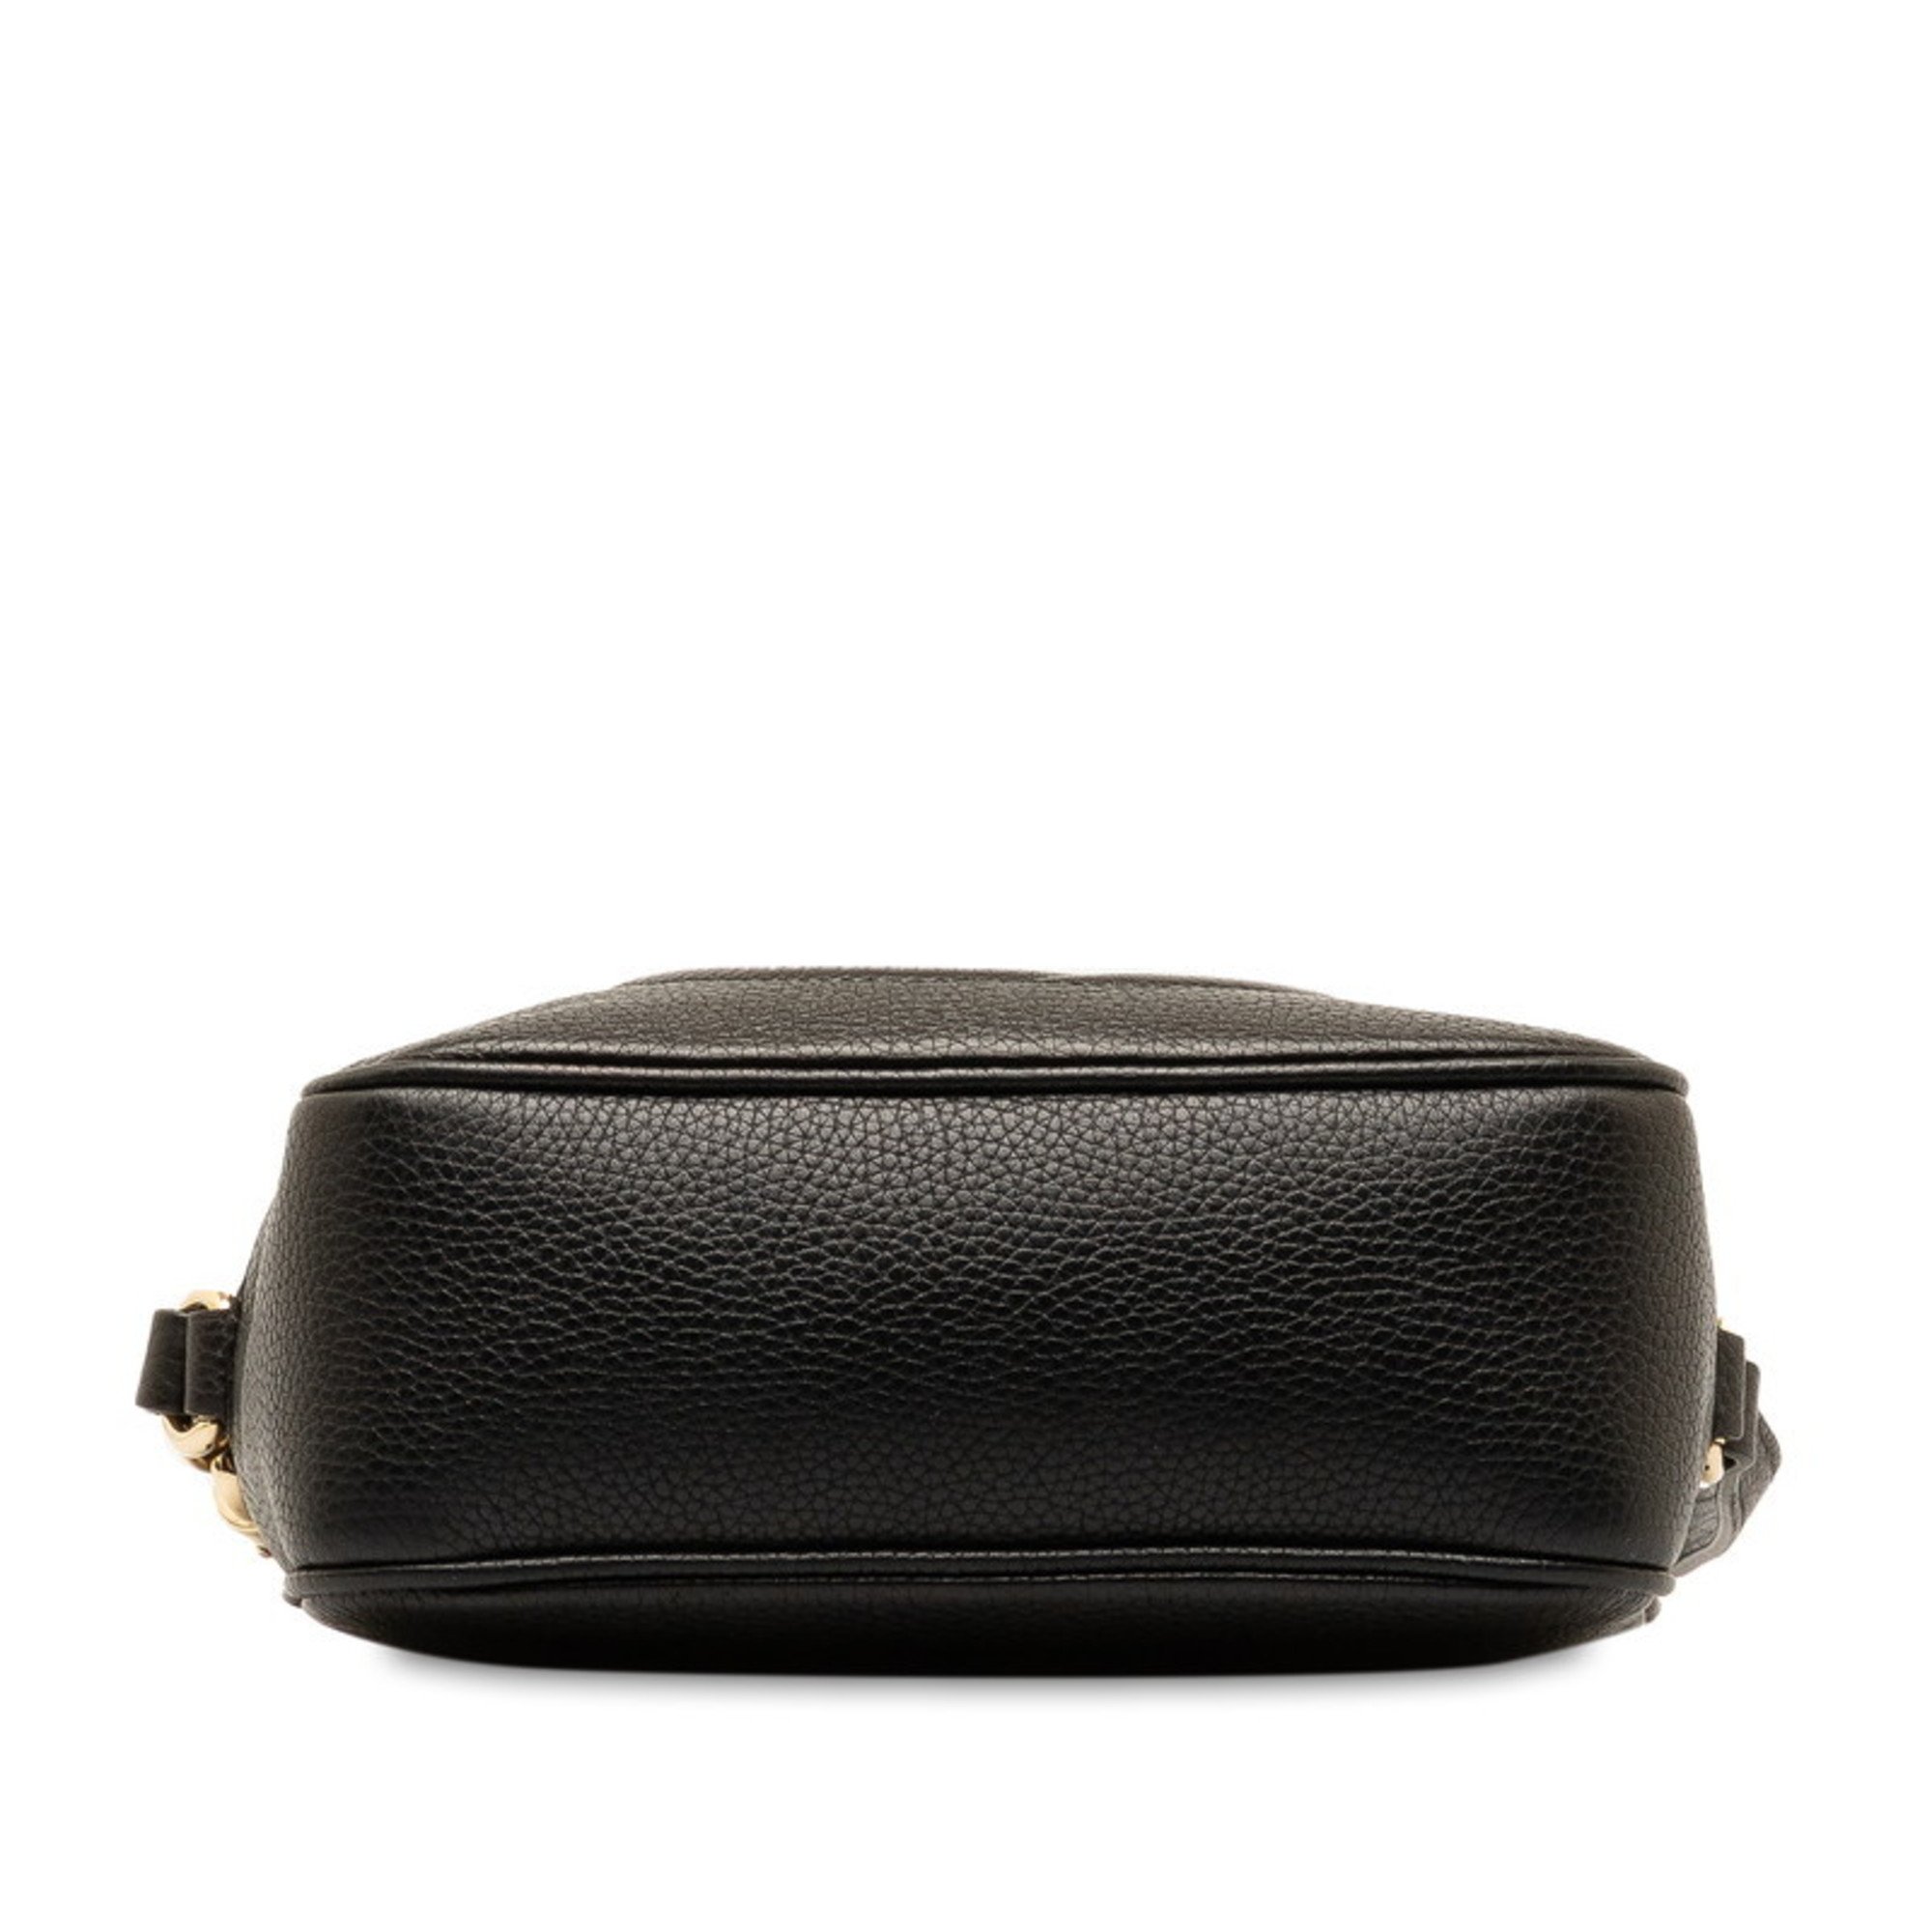 Gucci Interlocking G Soho Small Disco Tassel Shoulder Bag 308364 Black Leather Women's GUCCI